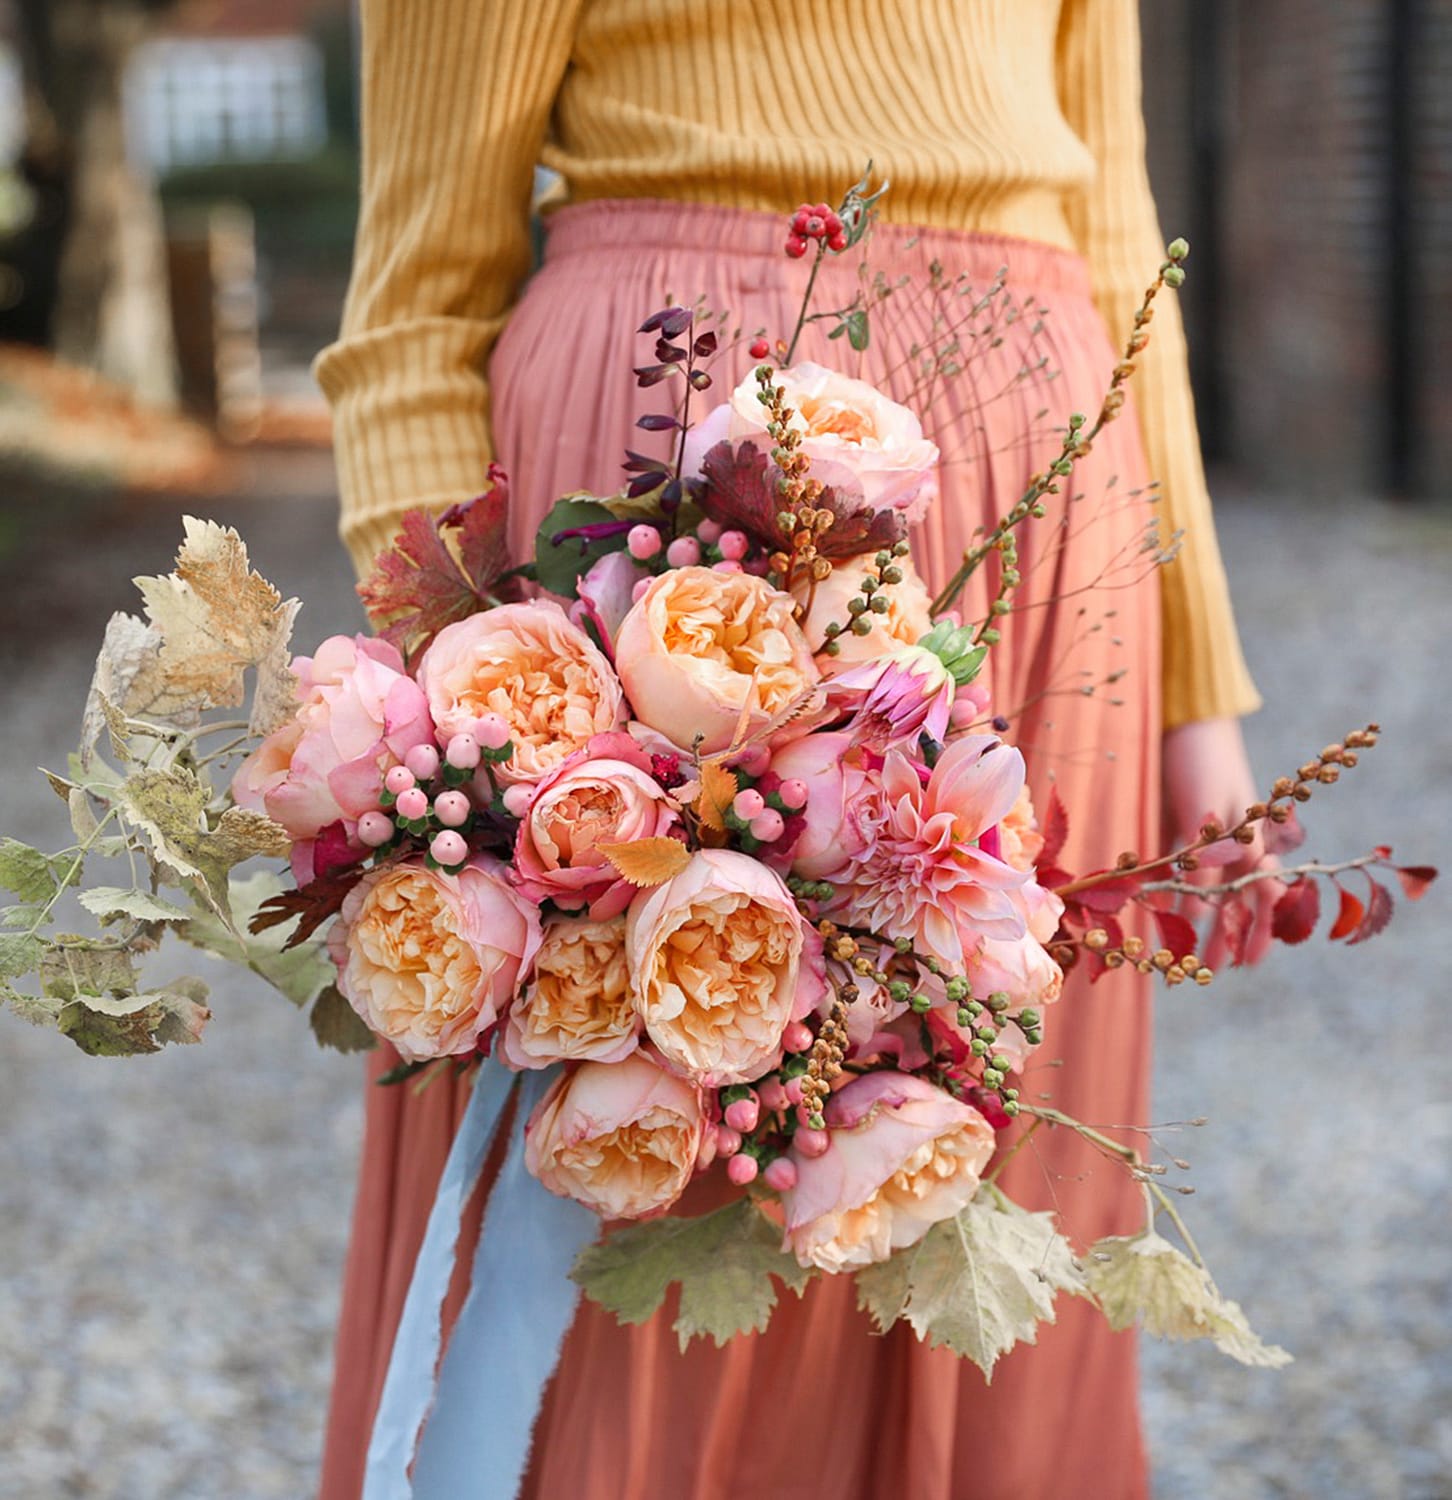 Edith diseño de boda de otoño de rosas